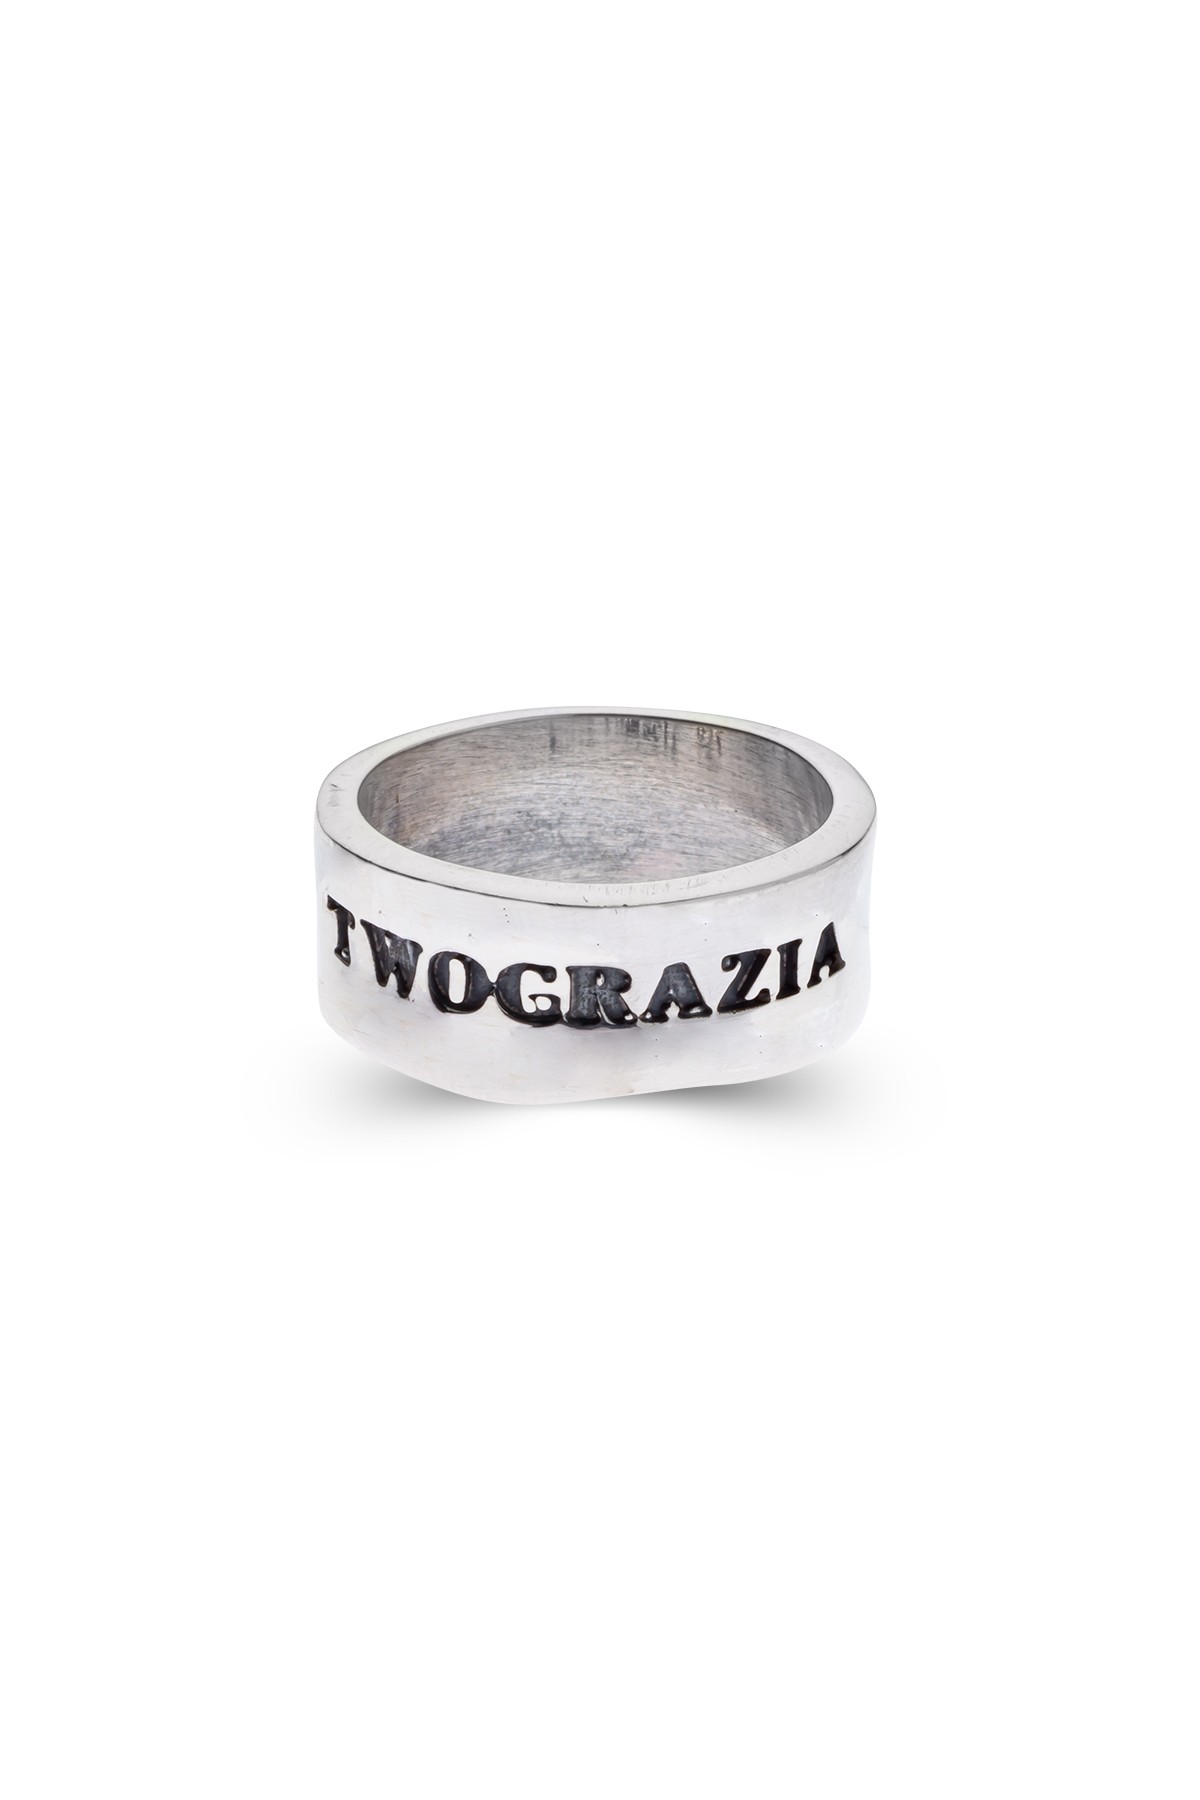 Twograzia Ring 